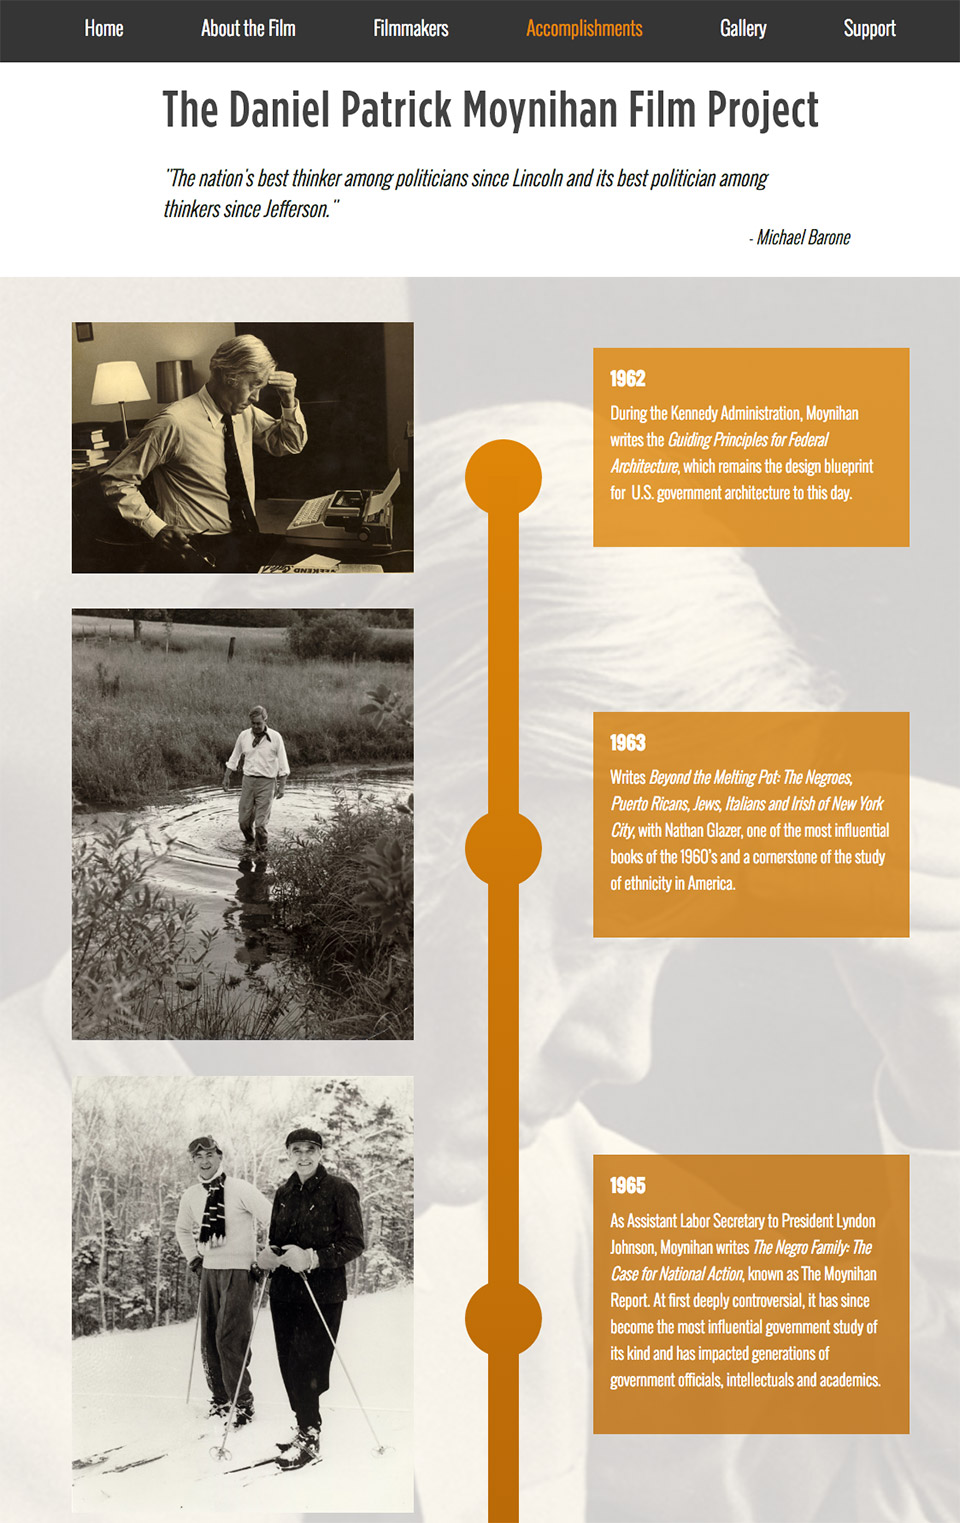 The Daniel Patrick Moynihan Film Project: Expandable Biographic Timeline